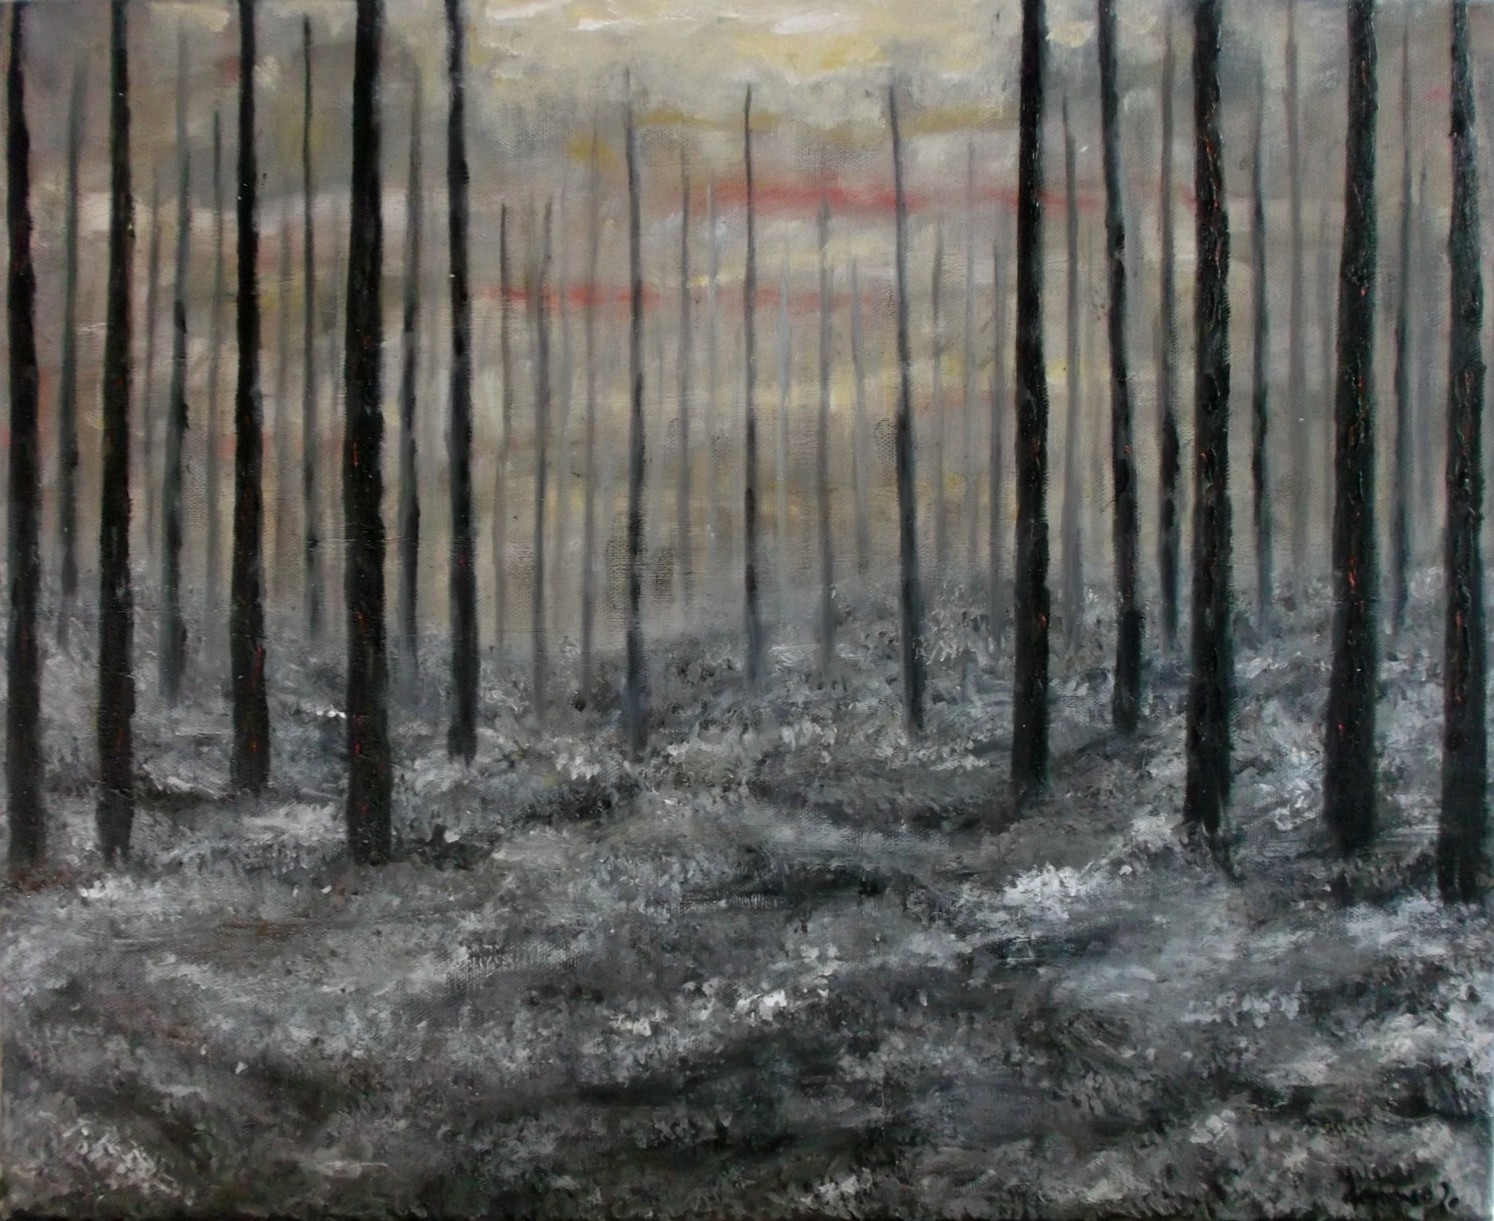 Desolation Oil on canvas.